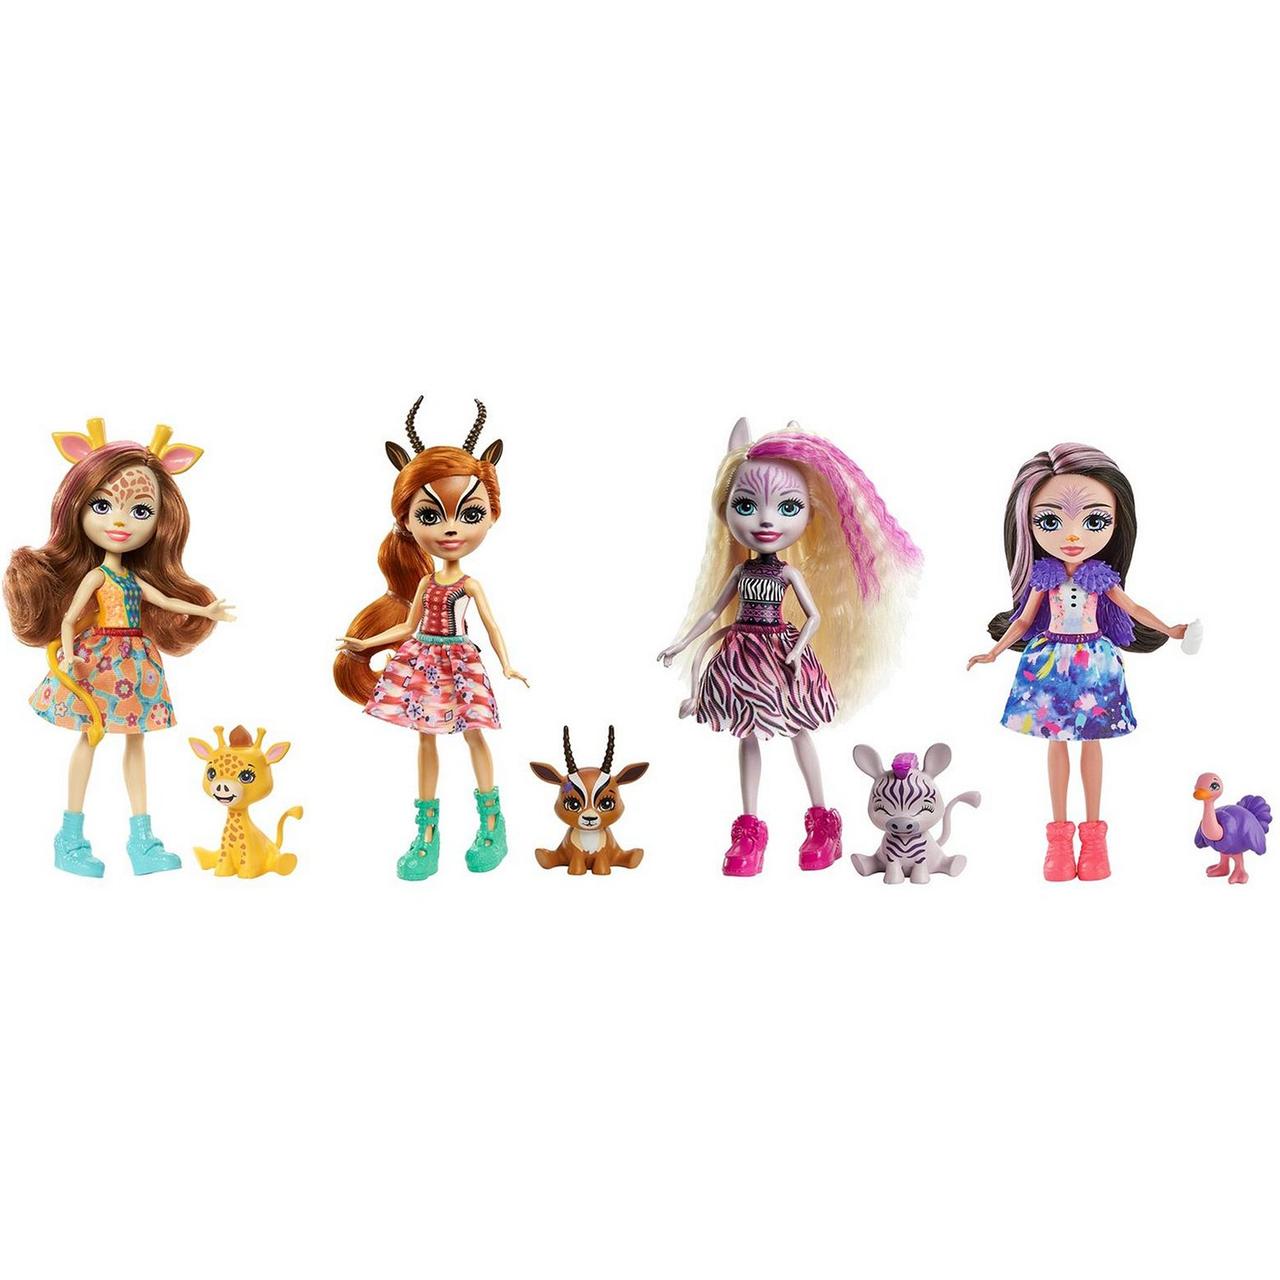 Набор из 4 кукол Энчантималс Солнечная саванна GYN57 Mattel